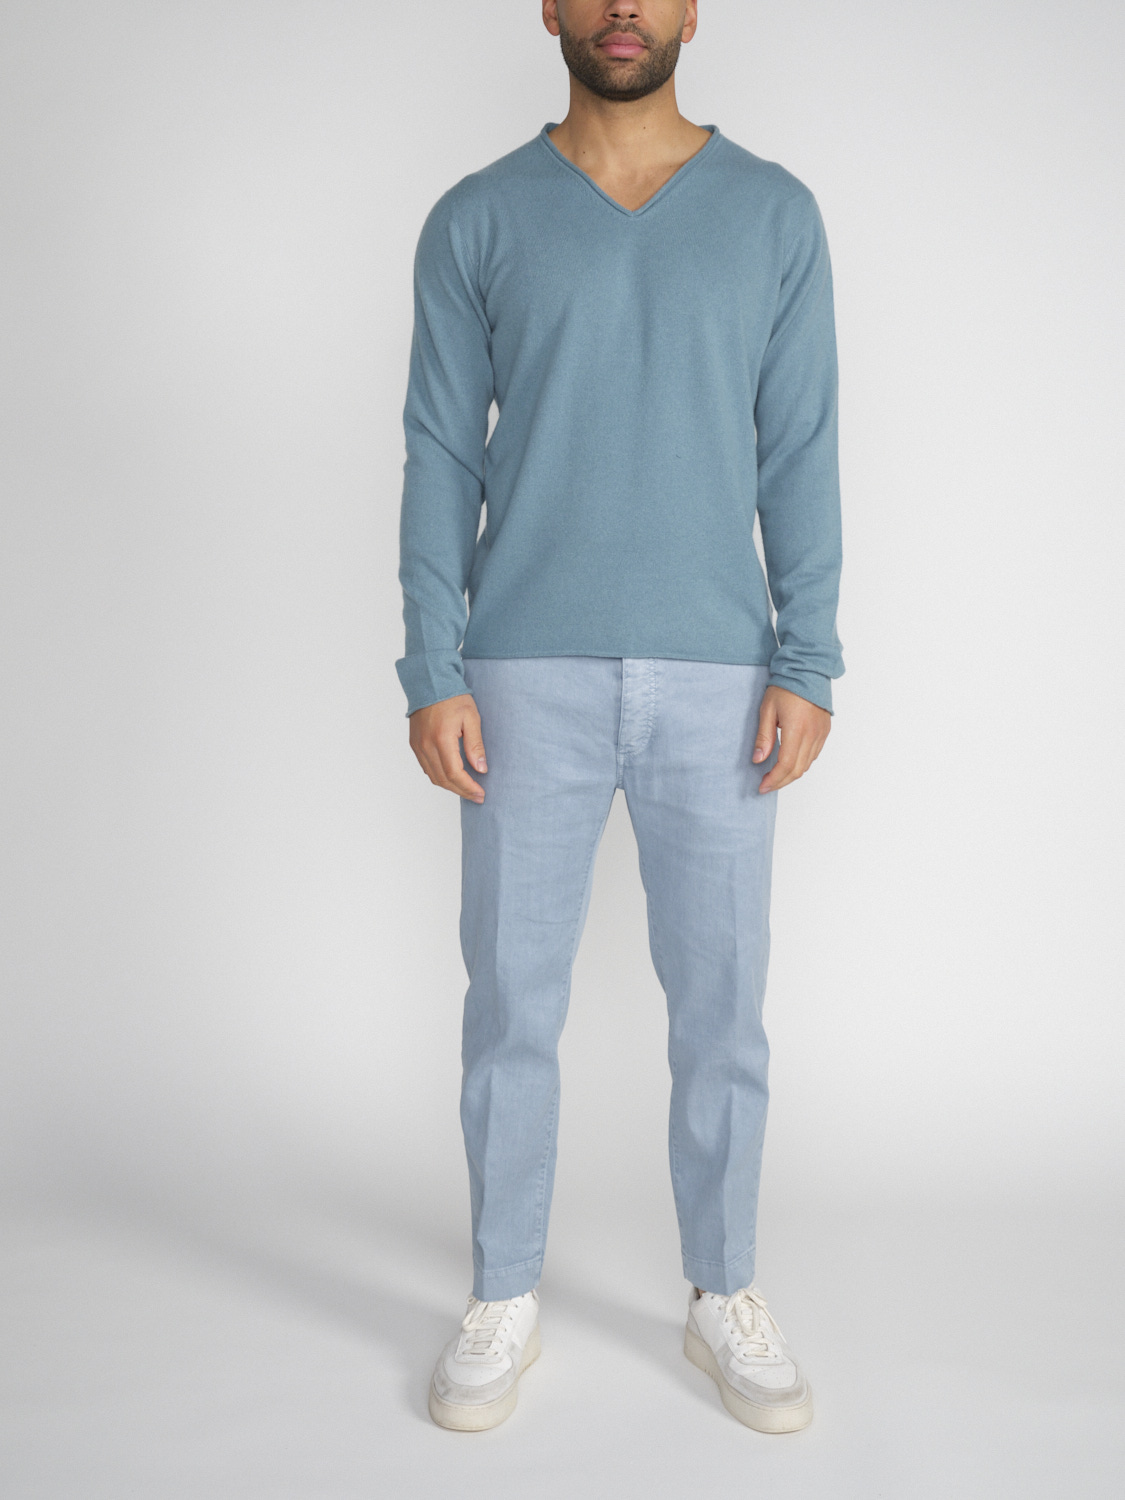 friendly hunting Maintain – Cashmere-Sweatshirt   mint L